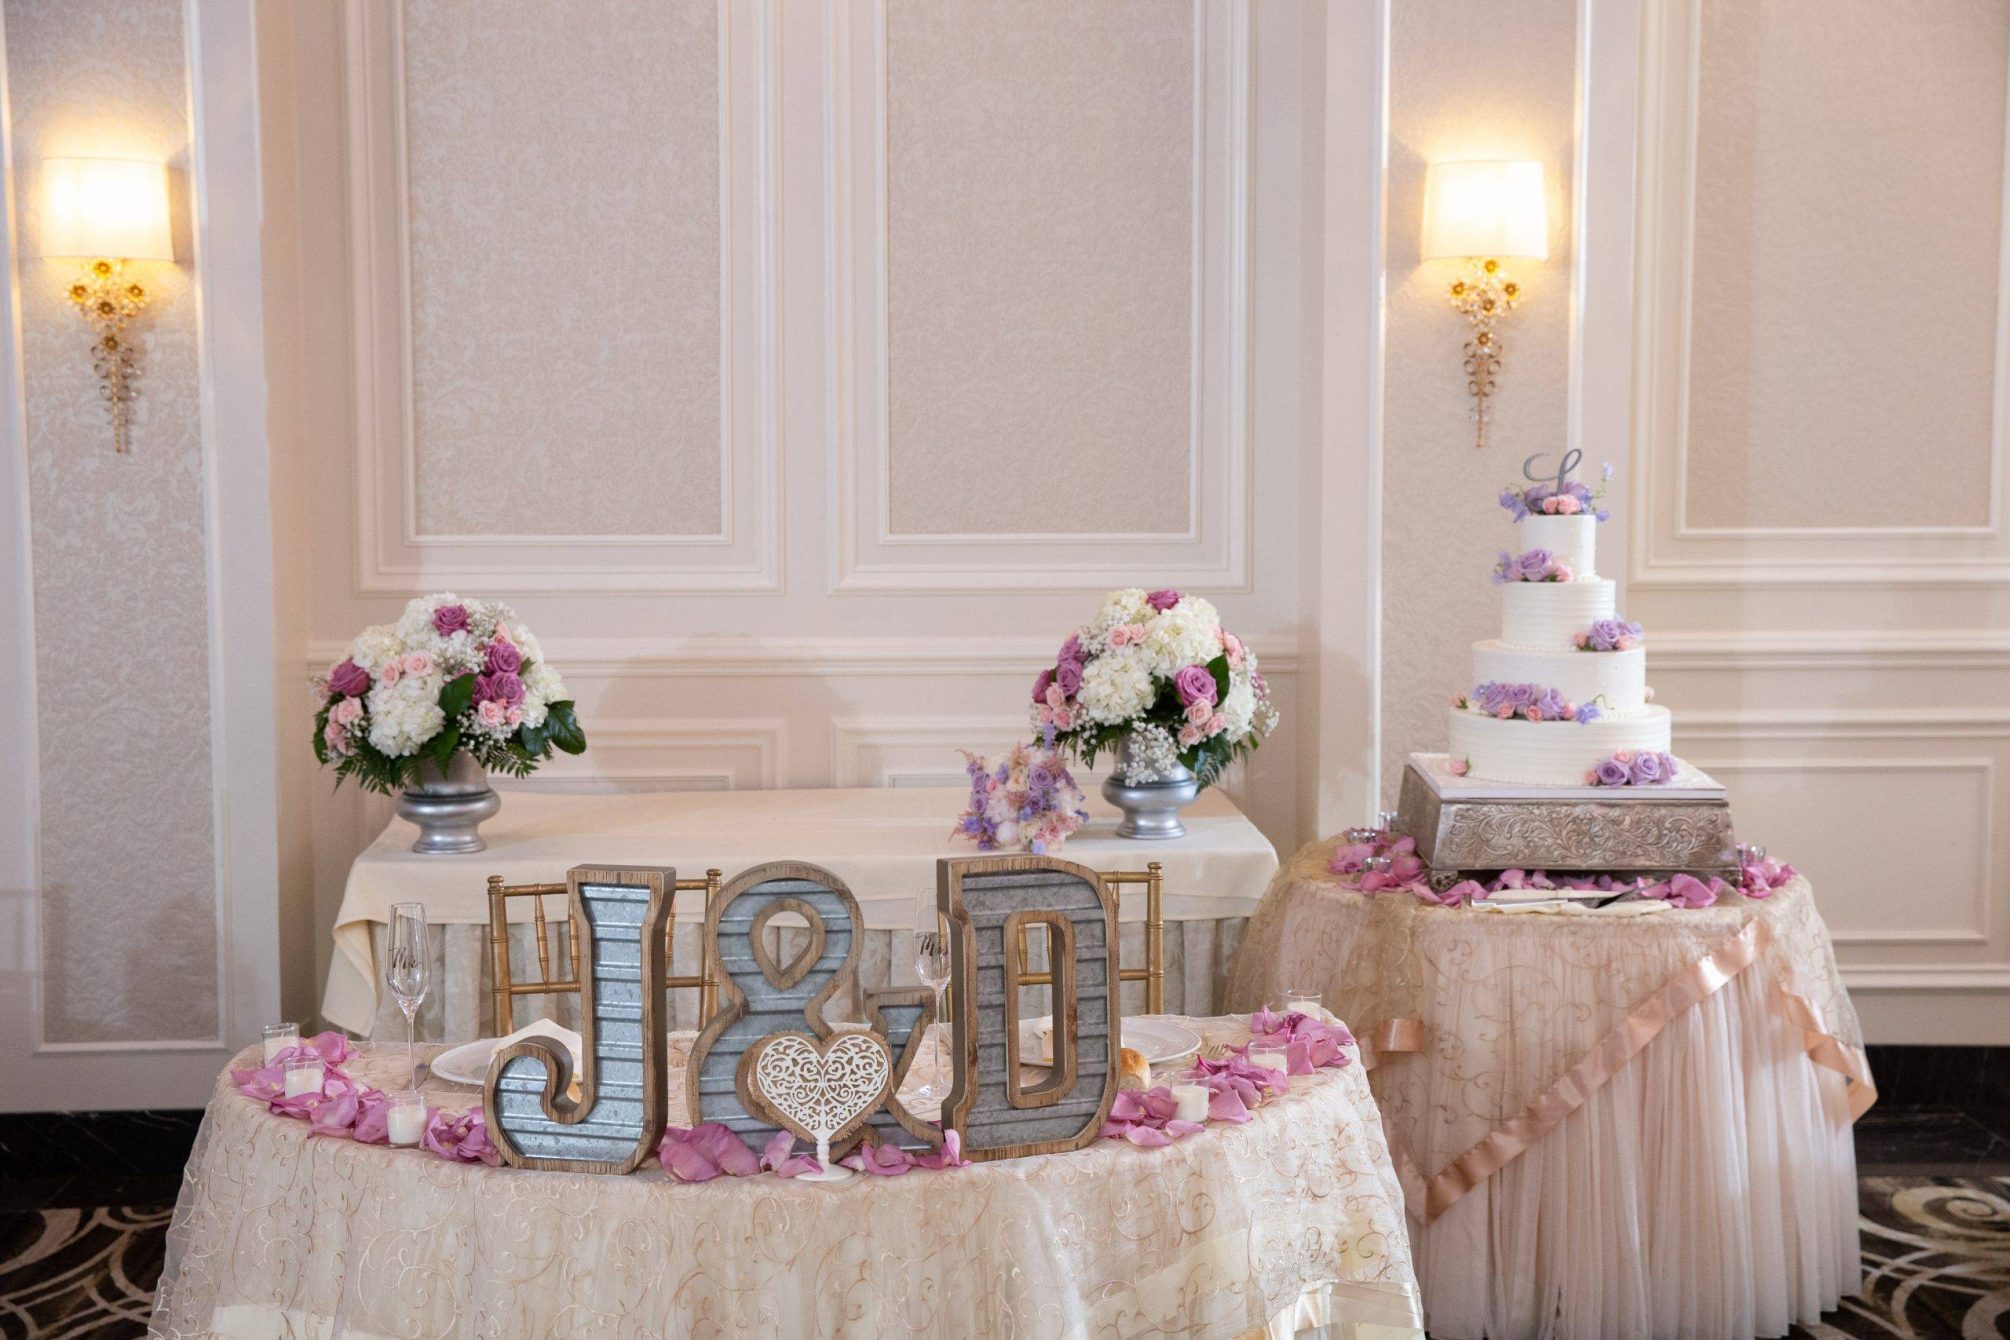 Meadow Wood wedding cake tables